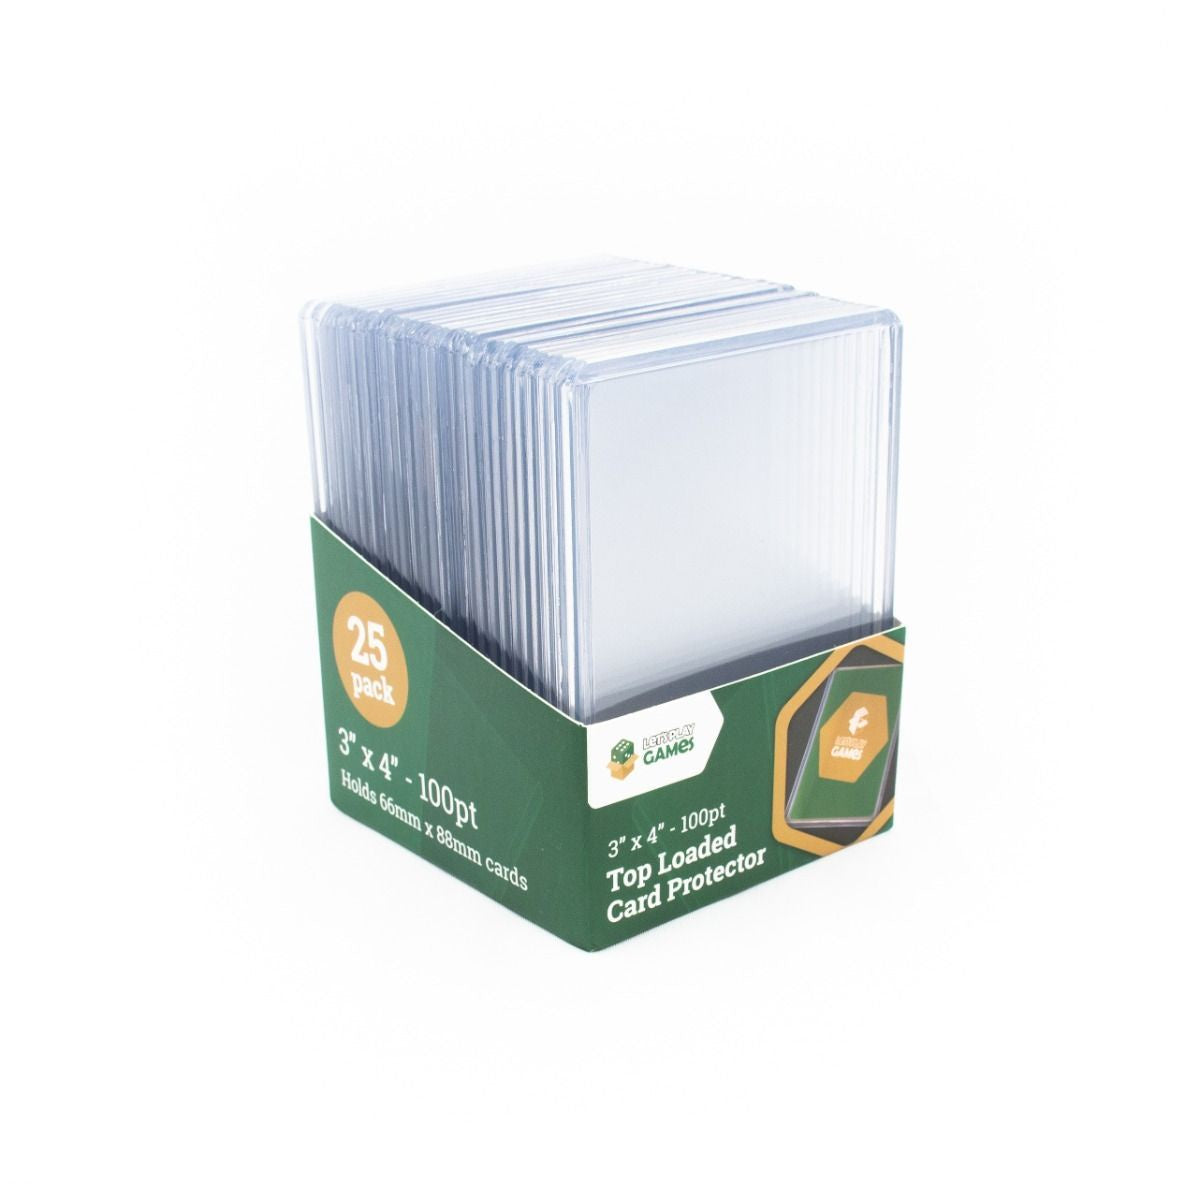 LPG Essentials - Top Loaded Card Protector 3x4 100pt (25)